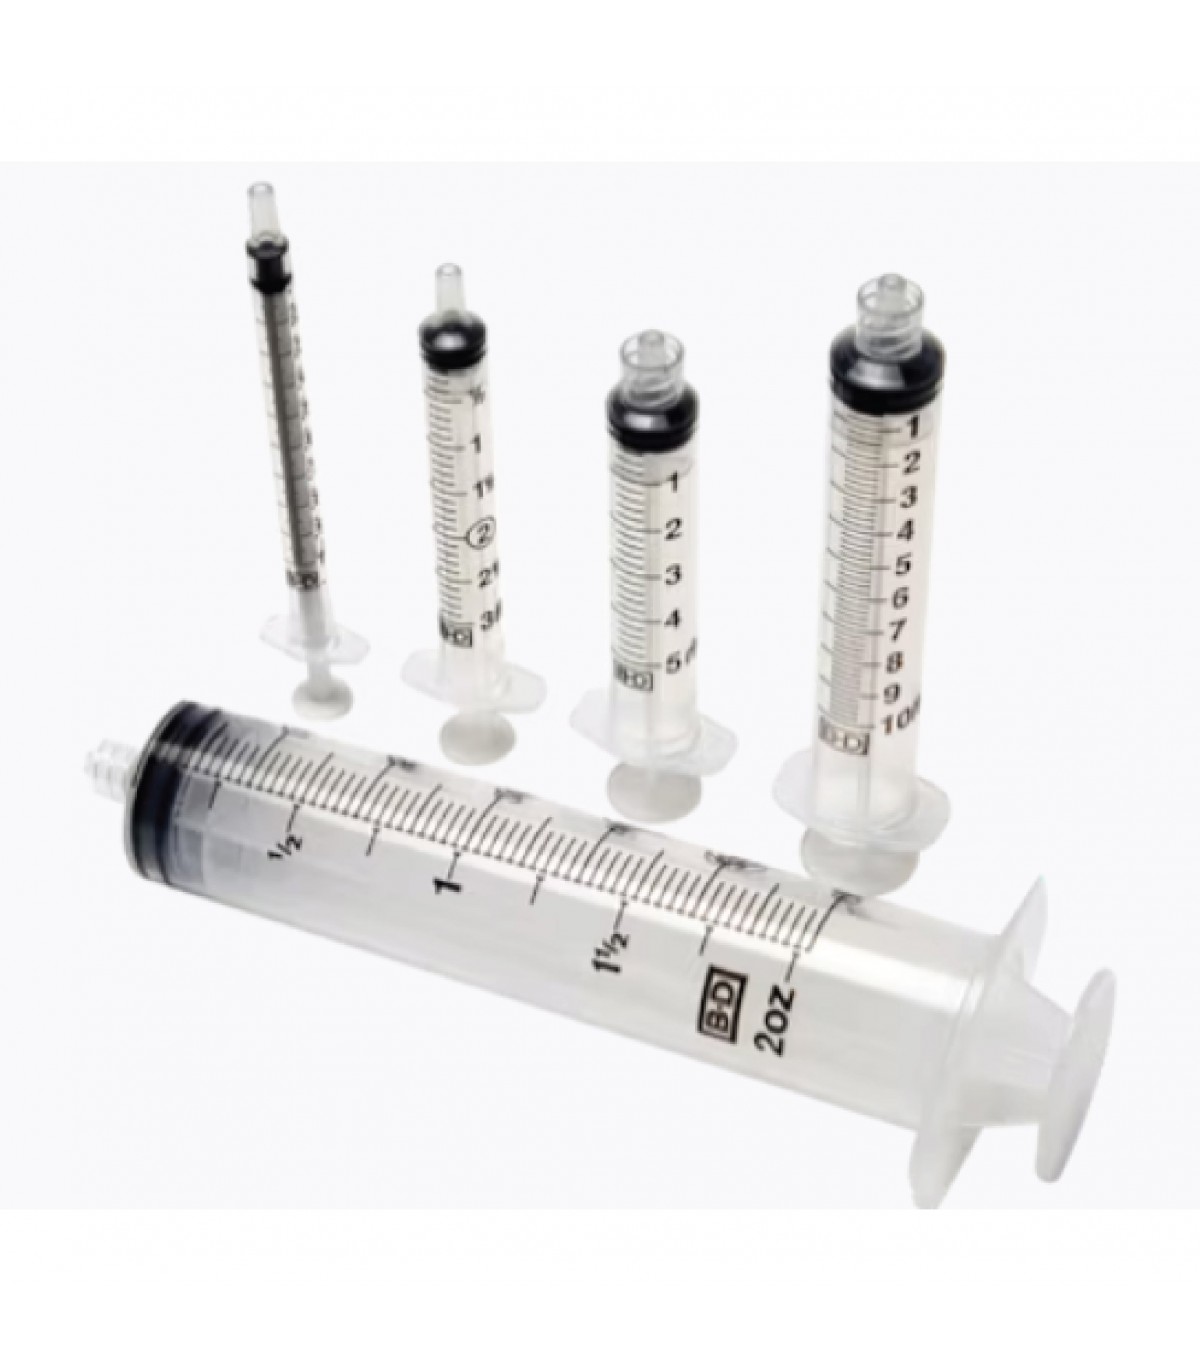 Buy BD Luer-Lok™ Syringe sterile, Econo Green Pte Ltd